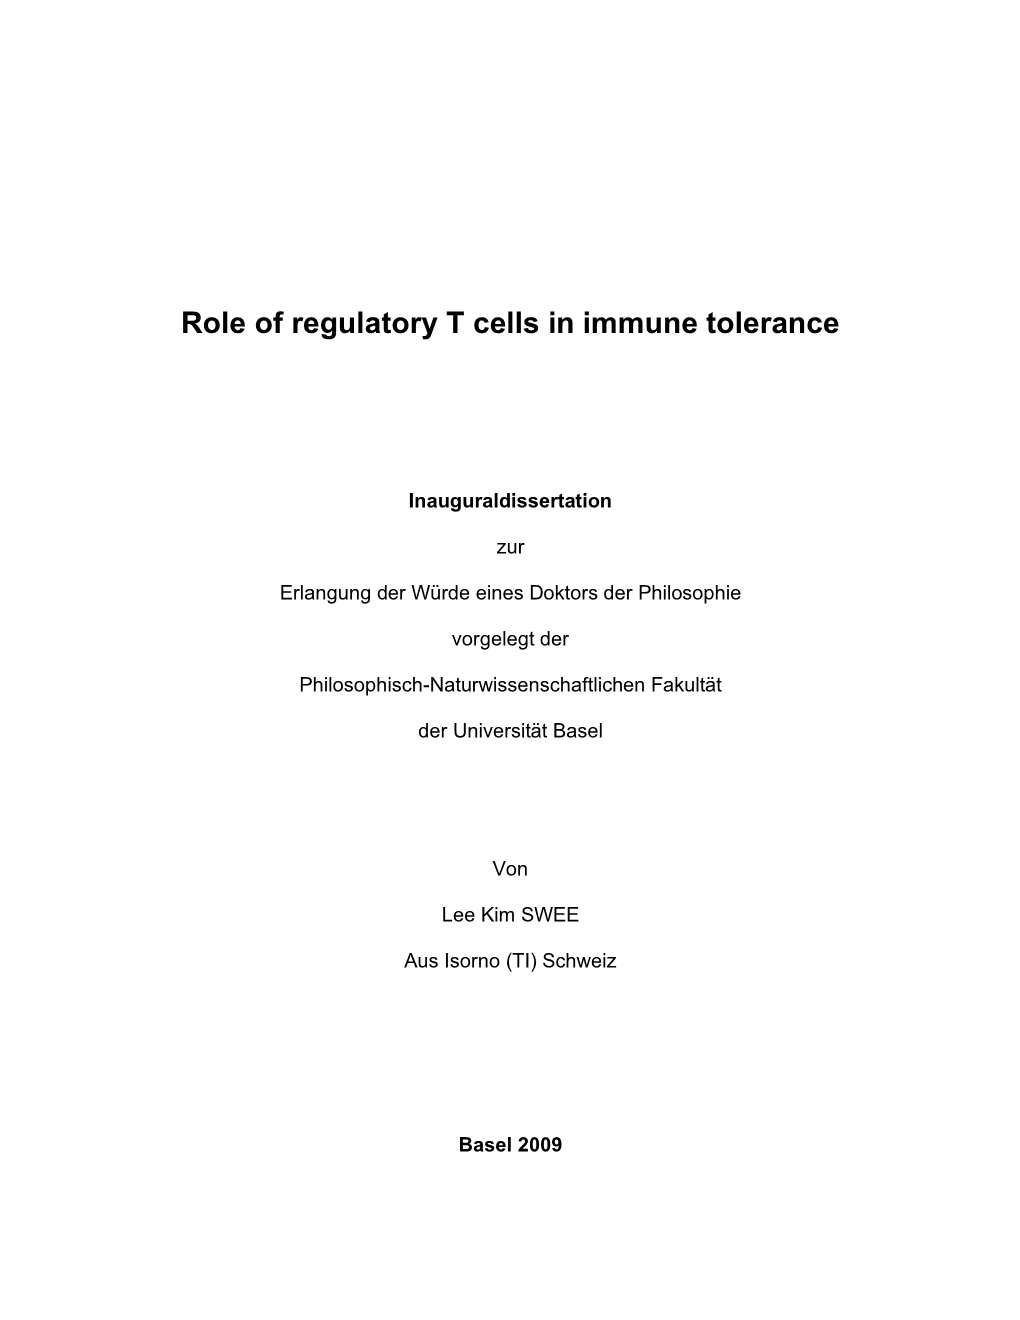 Role of Regulatory T Cells in Immune Tolerance